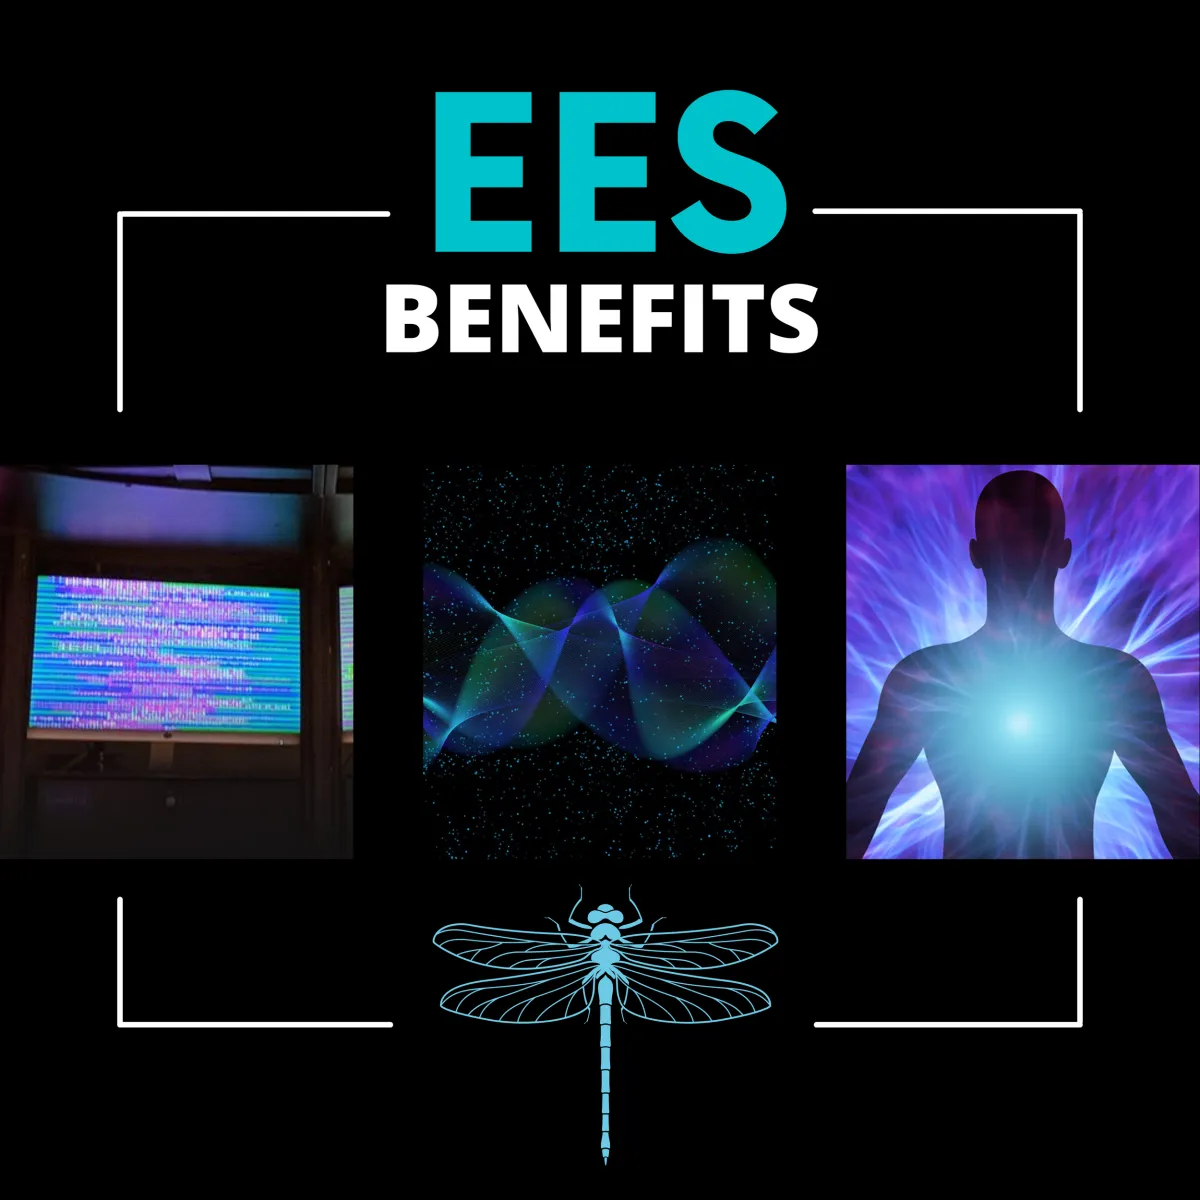 ESS Benefits